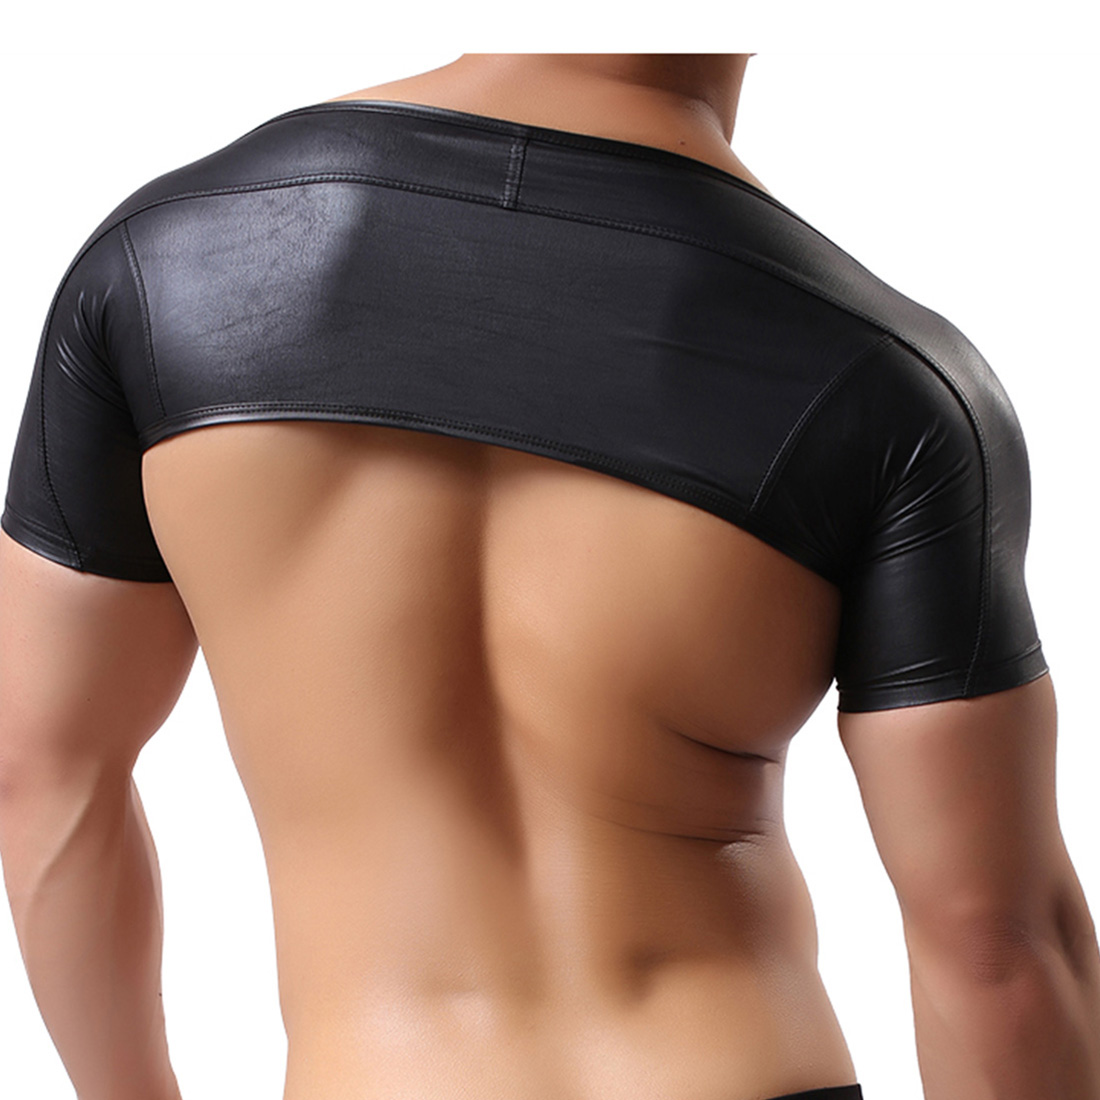 Men's Lingerie Underwear Stage Costumes Imitation Leather Waistcoat C49 Black XL